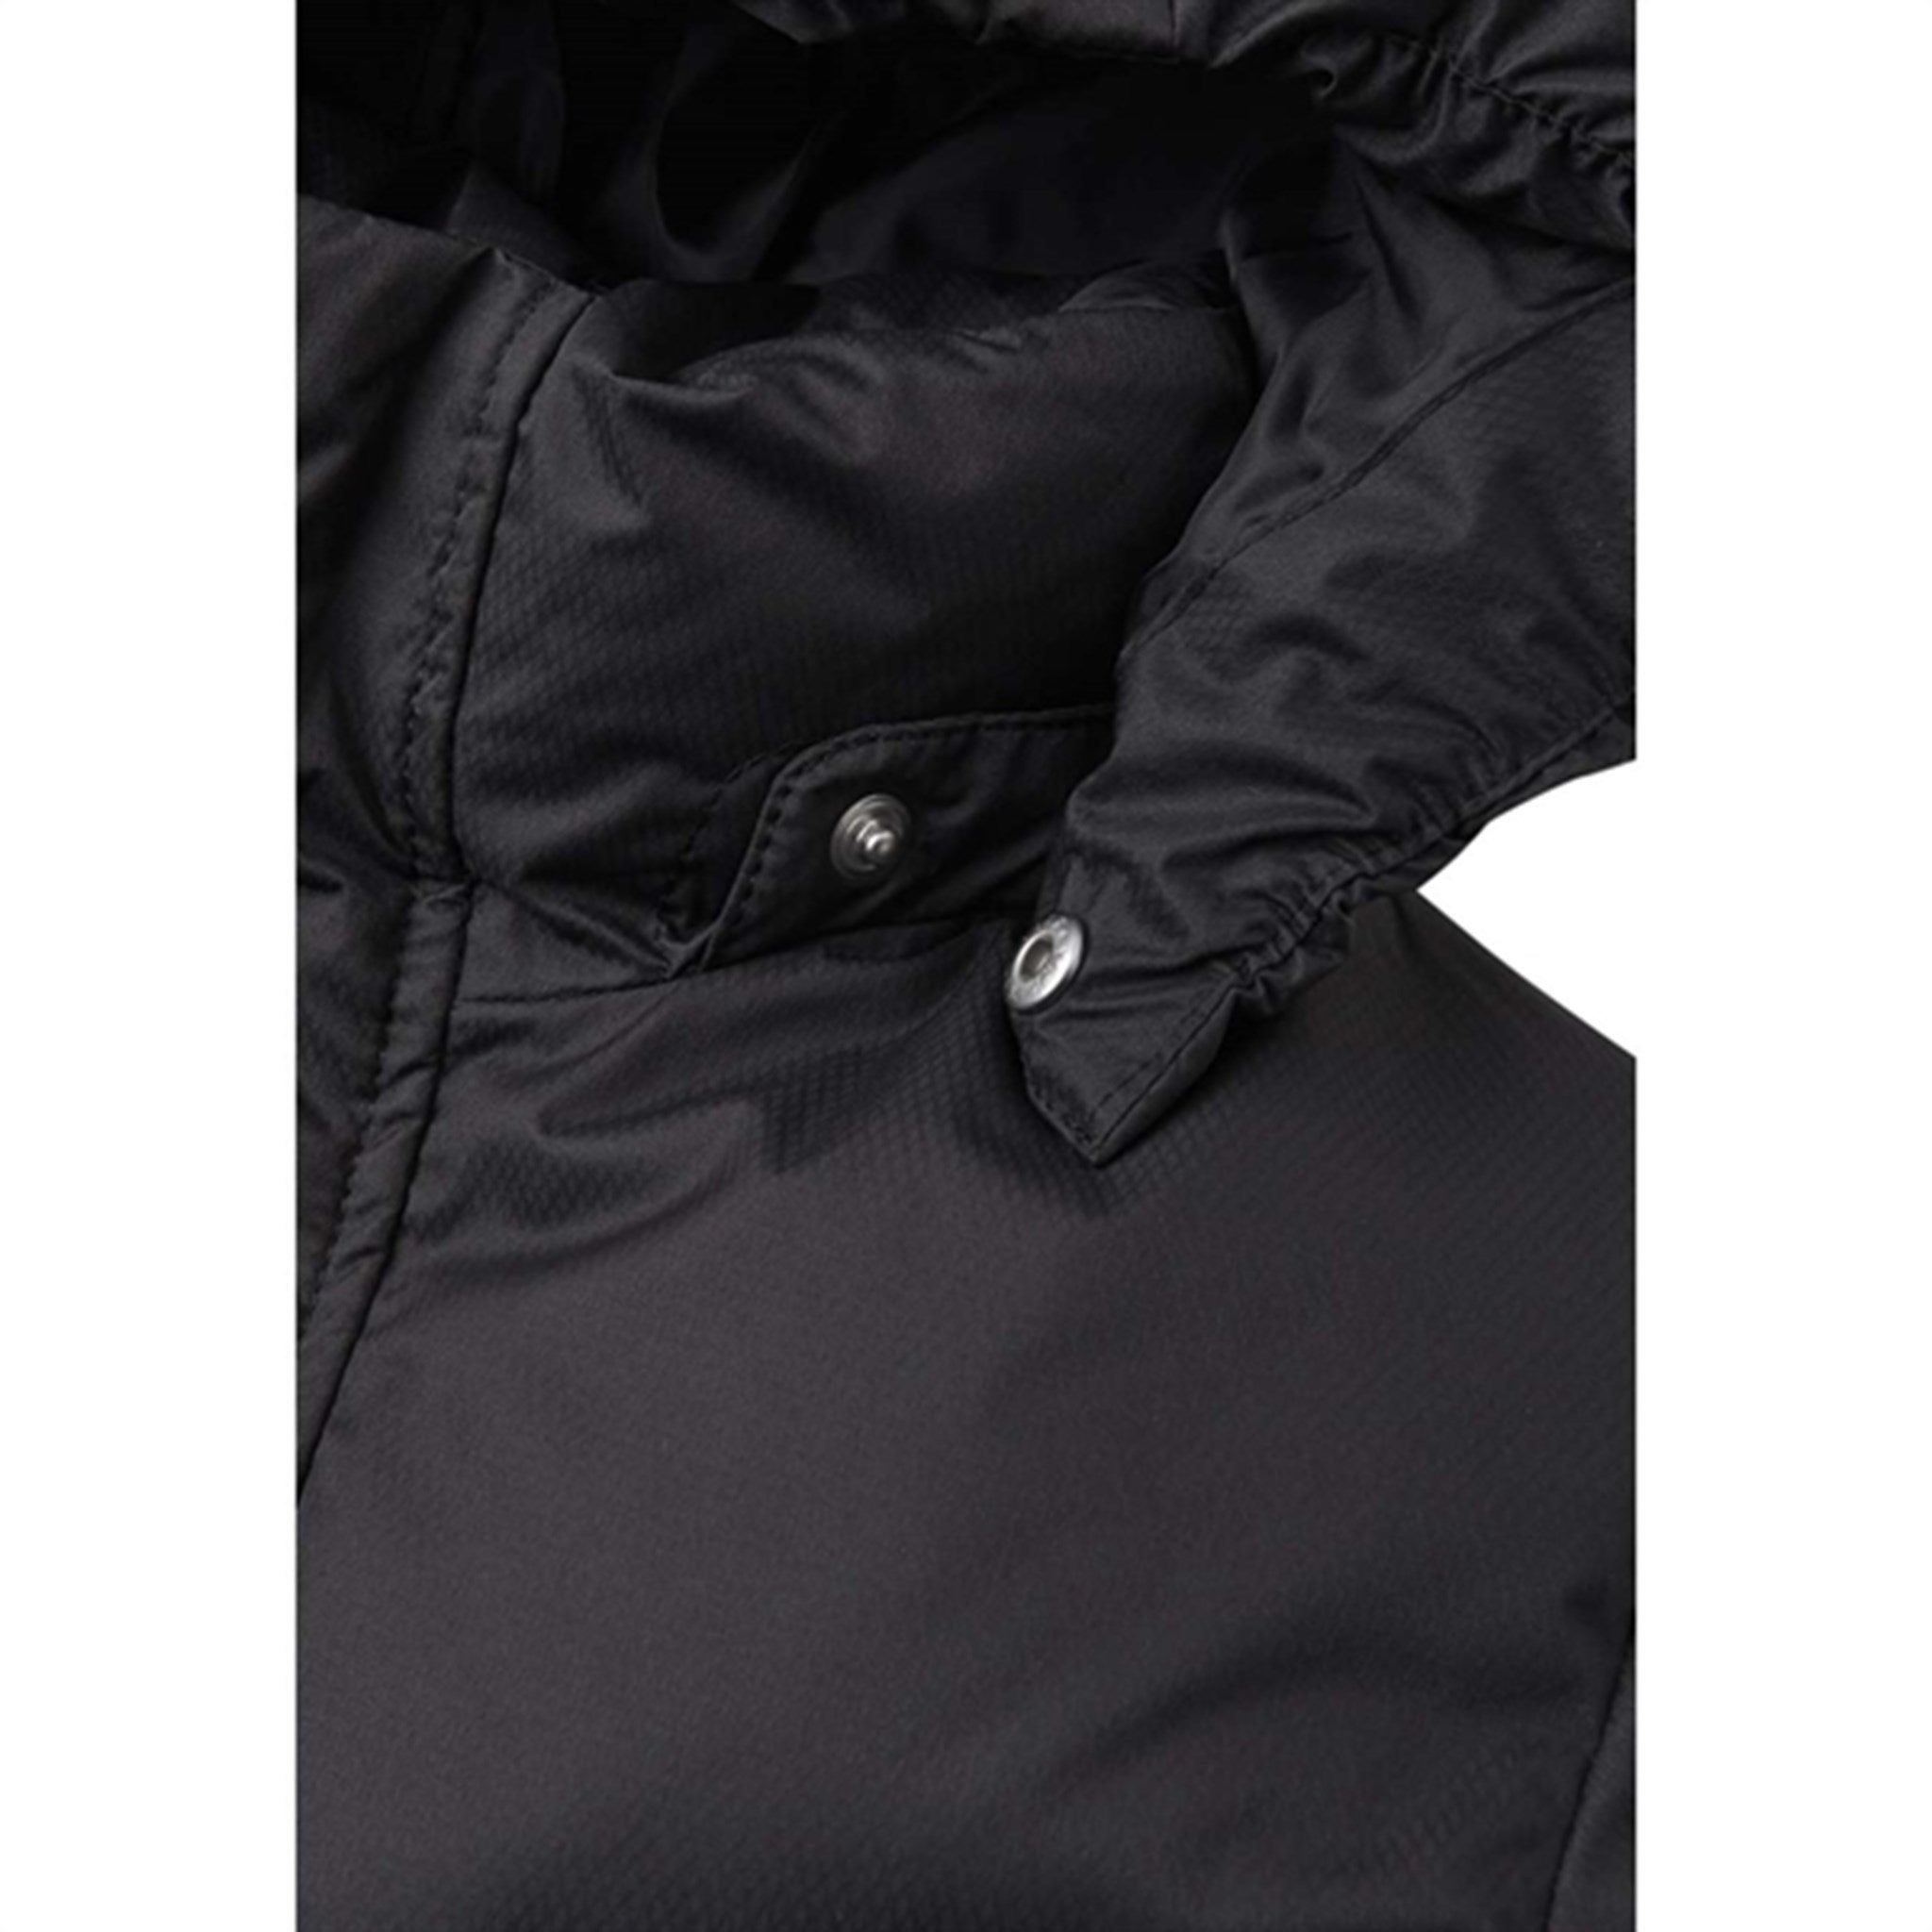 Reima Winter Jacket Vaanila Black 6